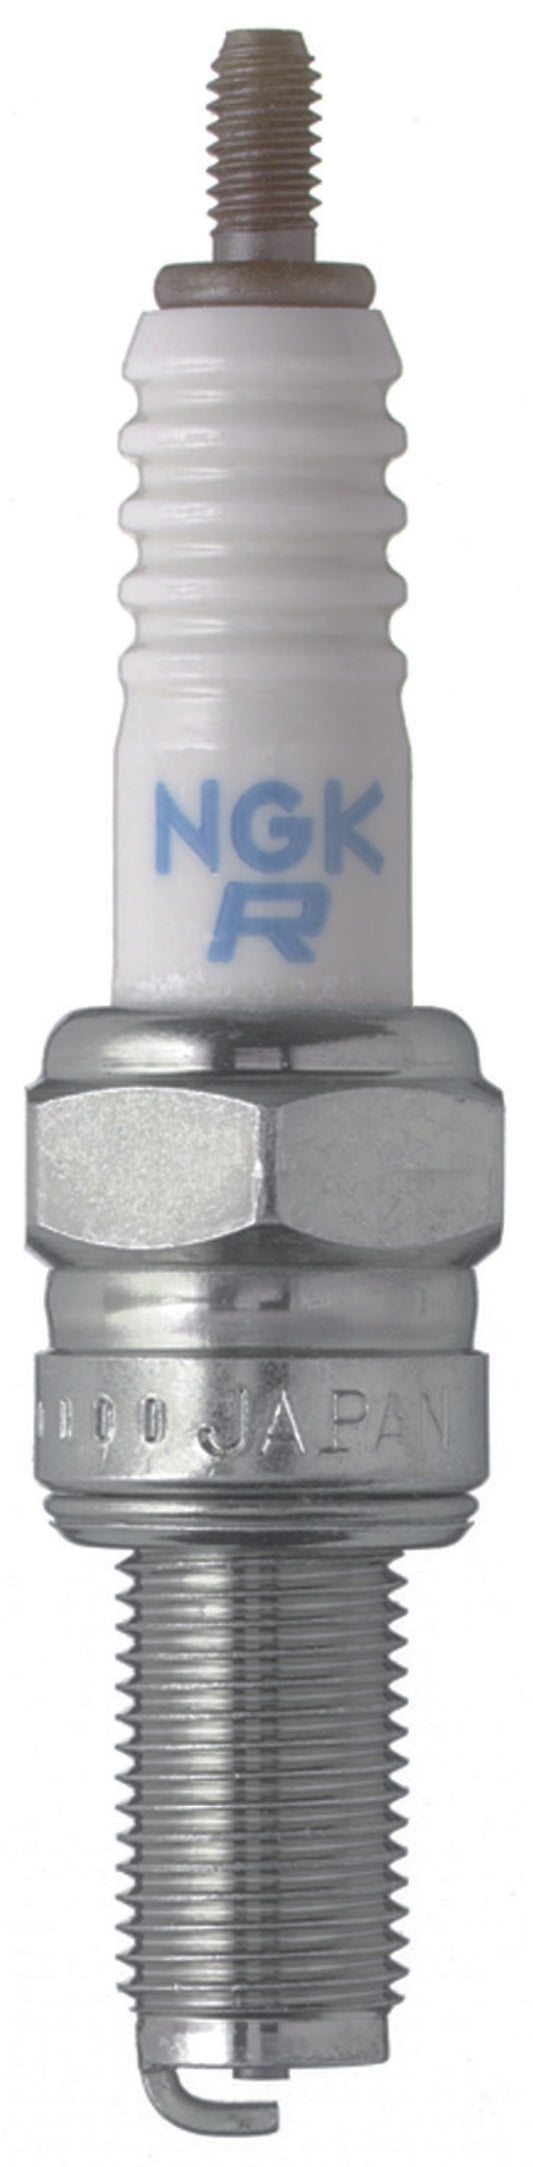 NGK Nickel Stock Spark Plugs Box of 4 (CR9E)